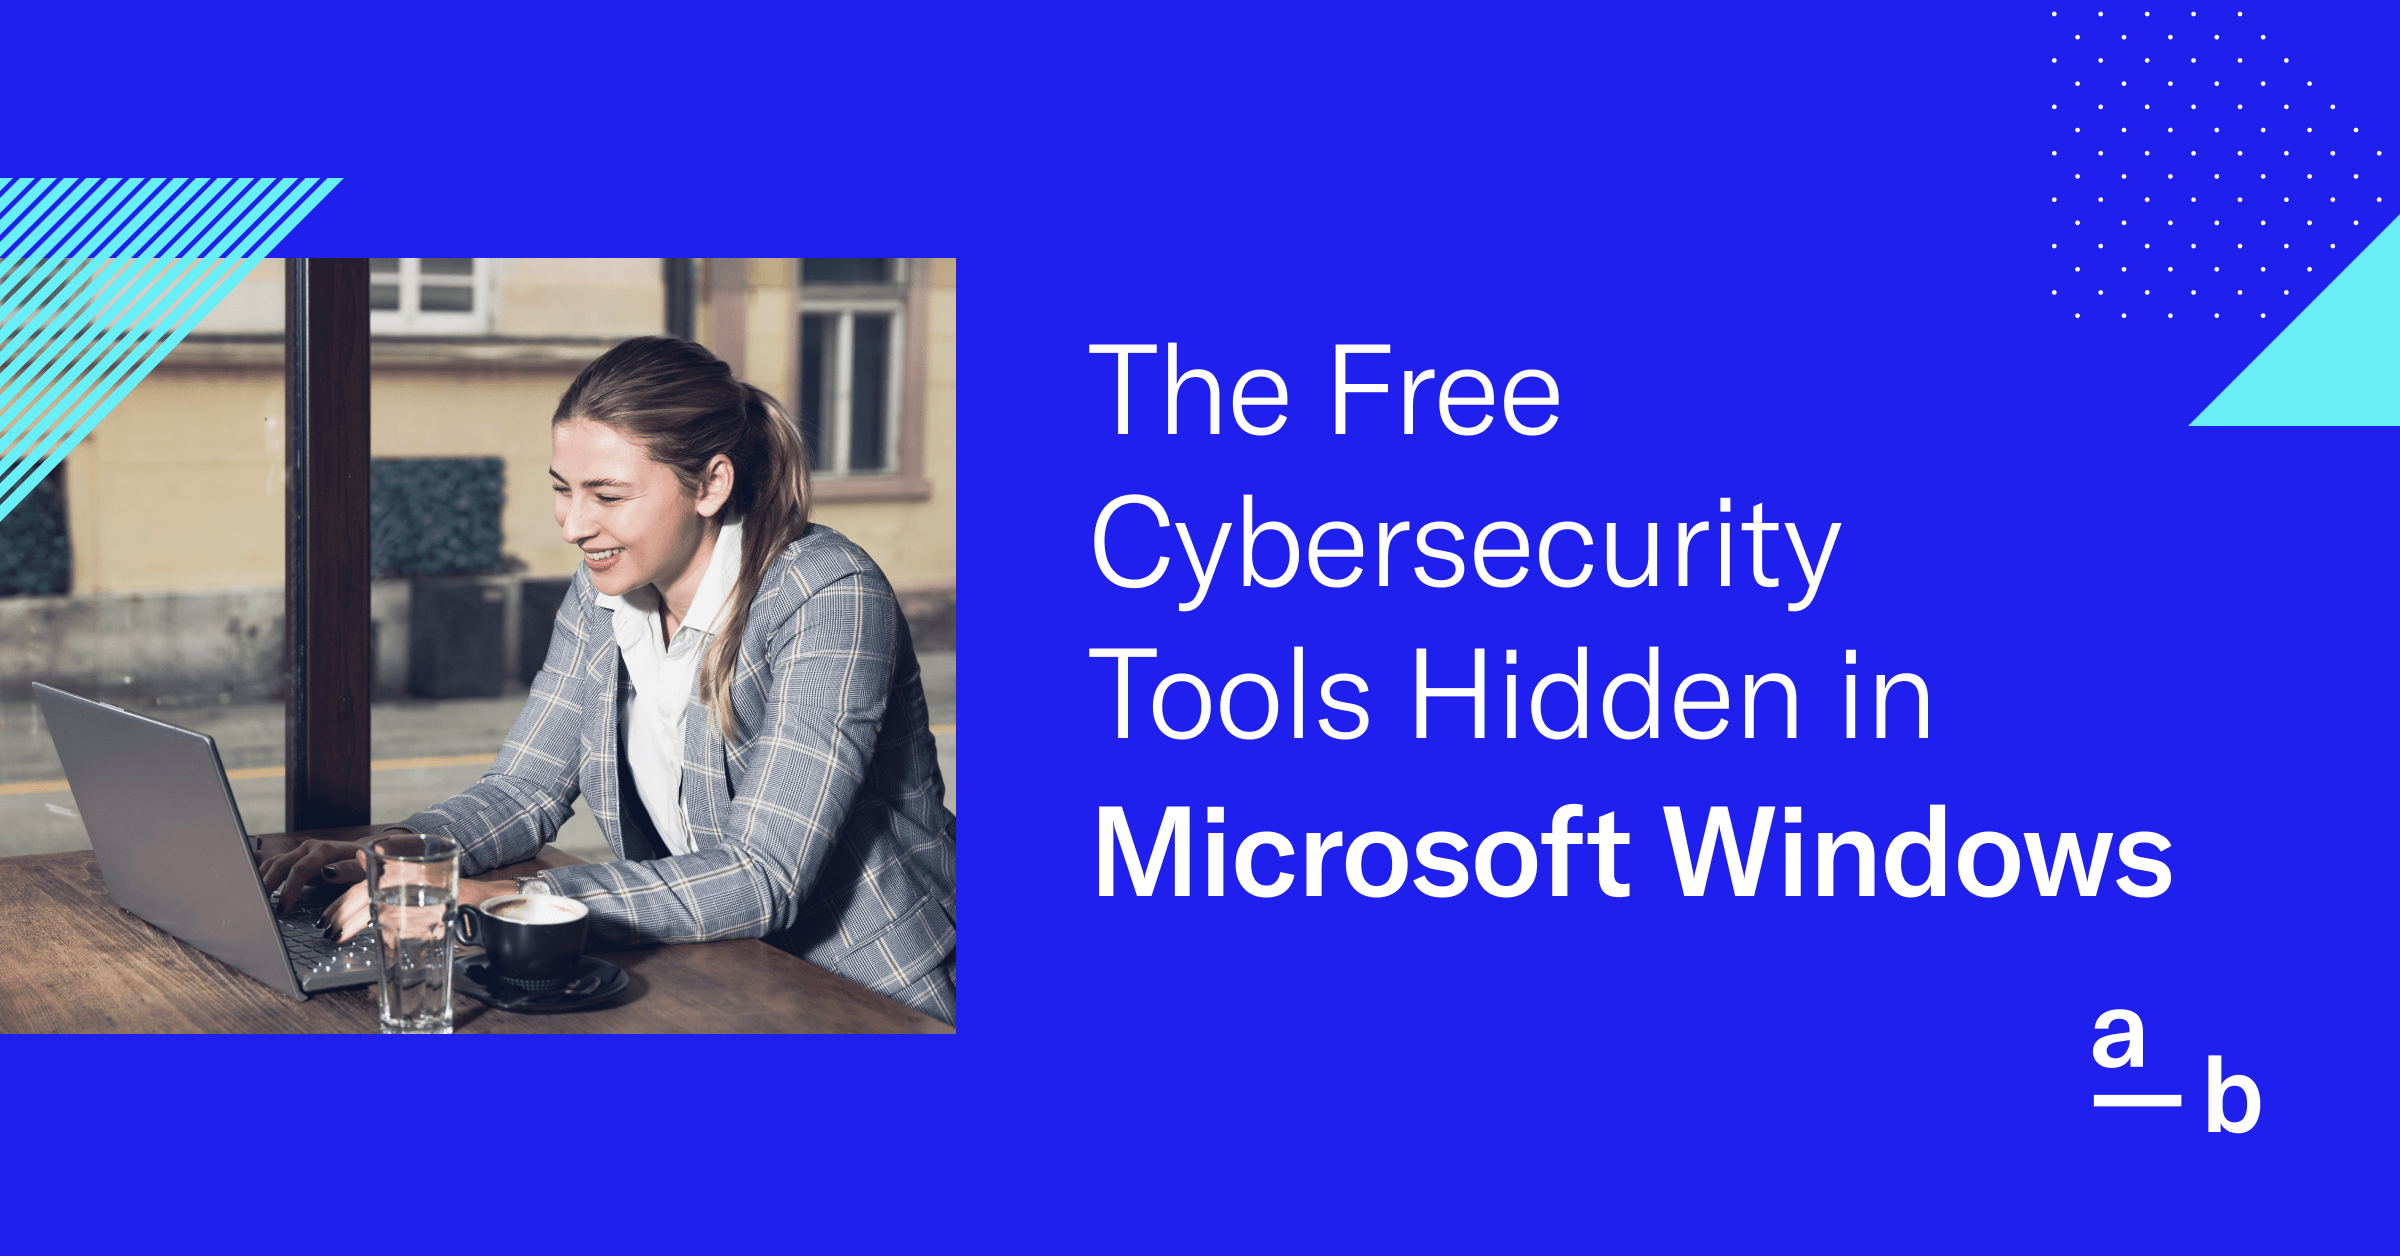 The Free Cybersecurity Tools Hidden in Microsoft Windows